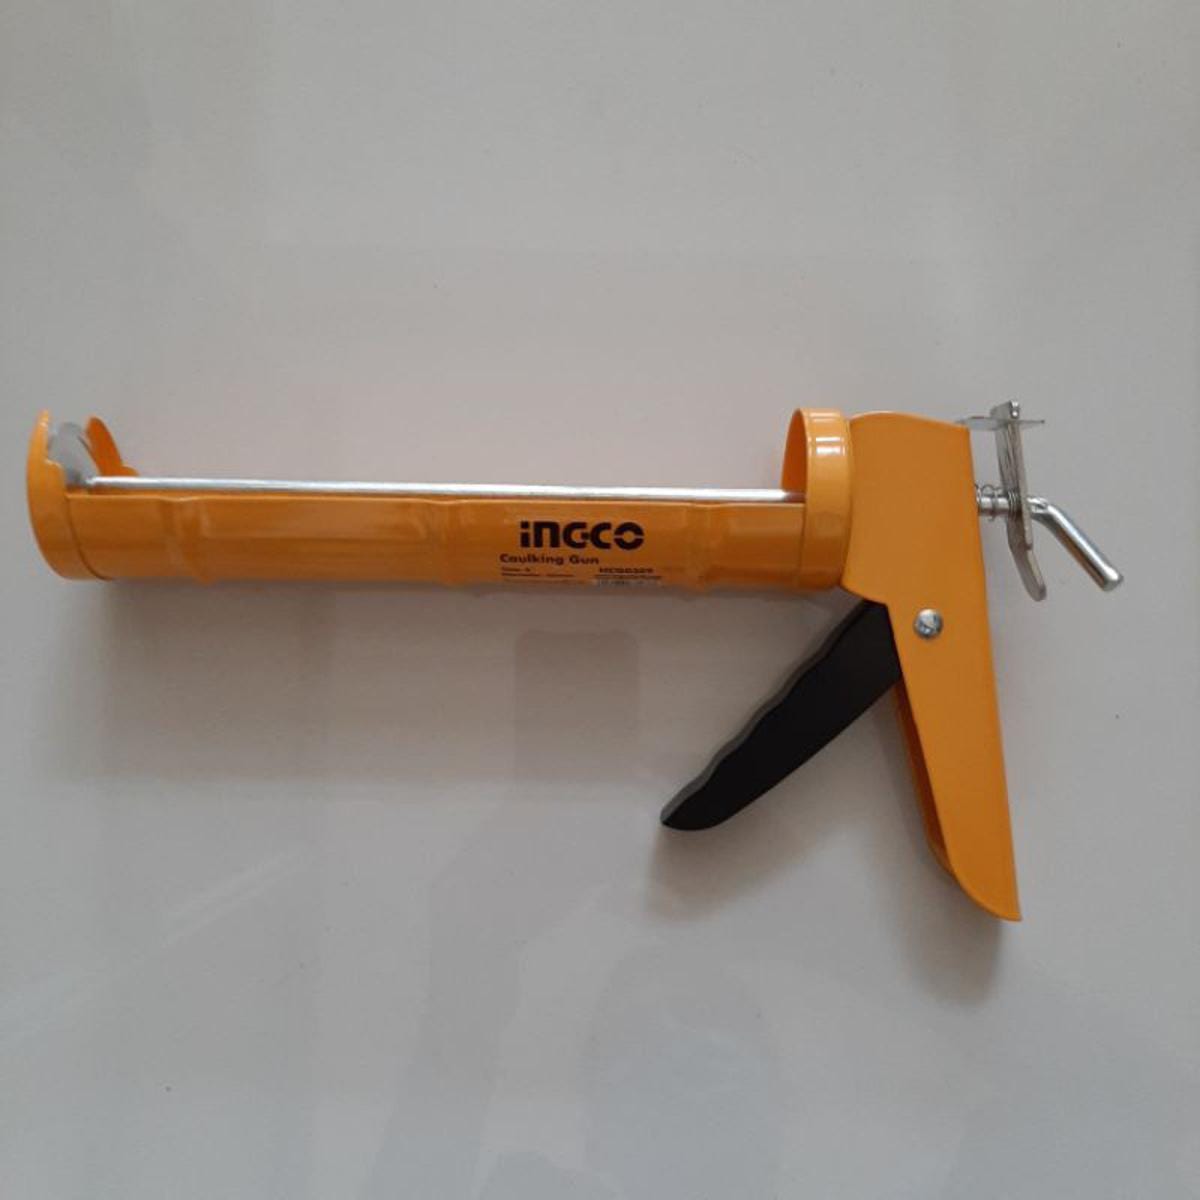 Ingco 9" Caulking Silicon Sealant Gun - HCG1809 | Supply Master | Accra, Ghana Caulking Gun Buy Tools hardware Building materials